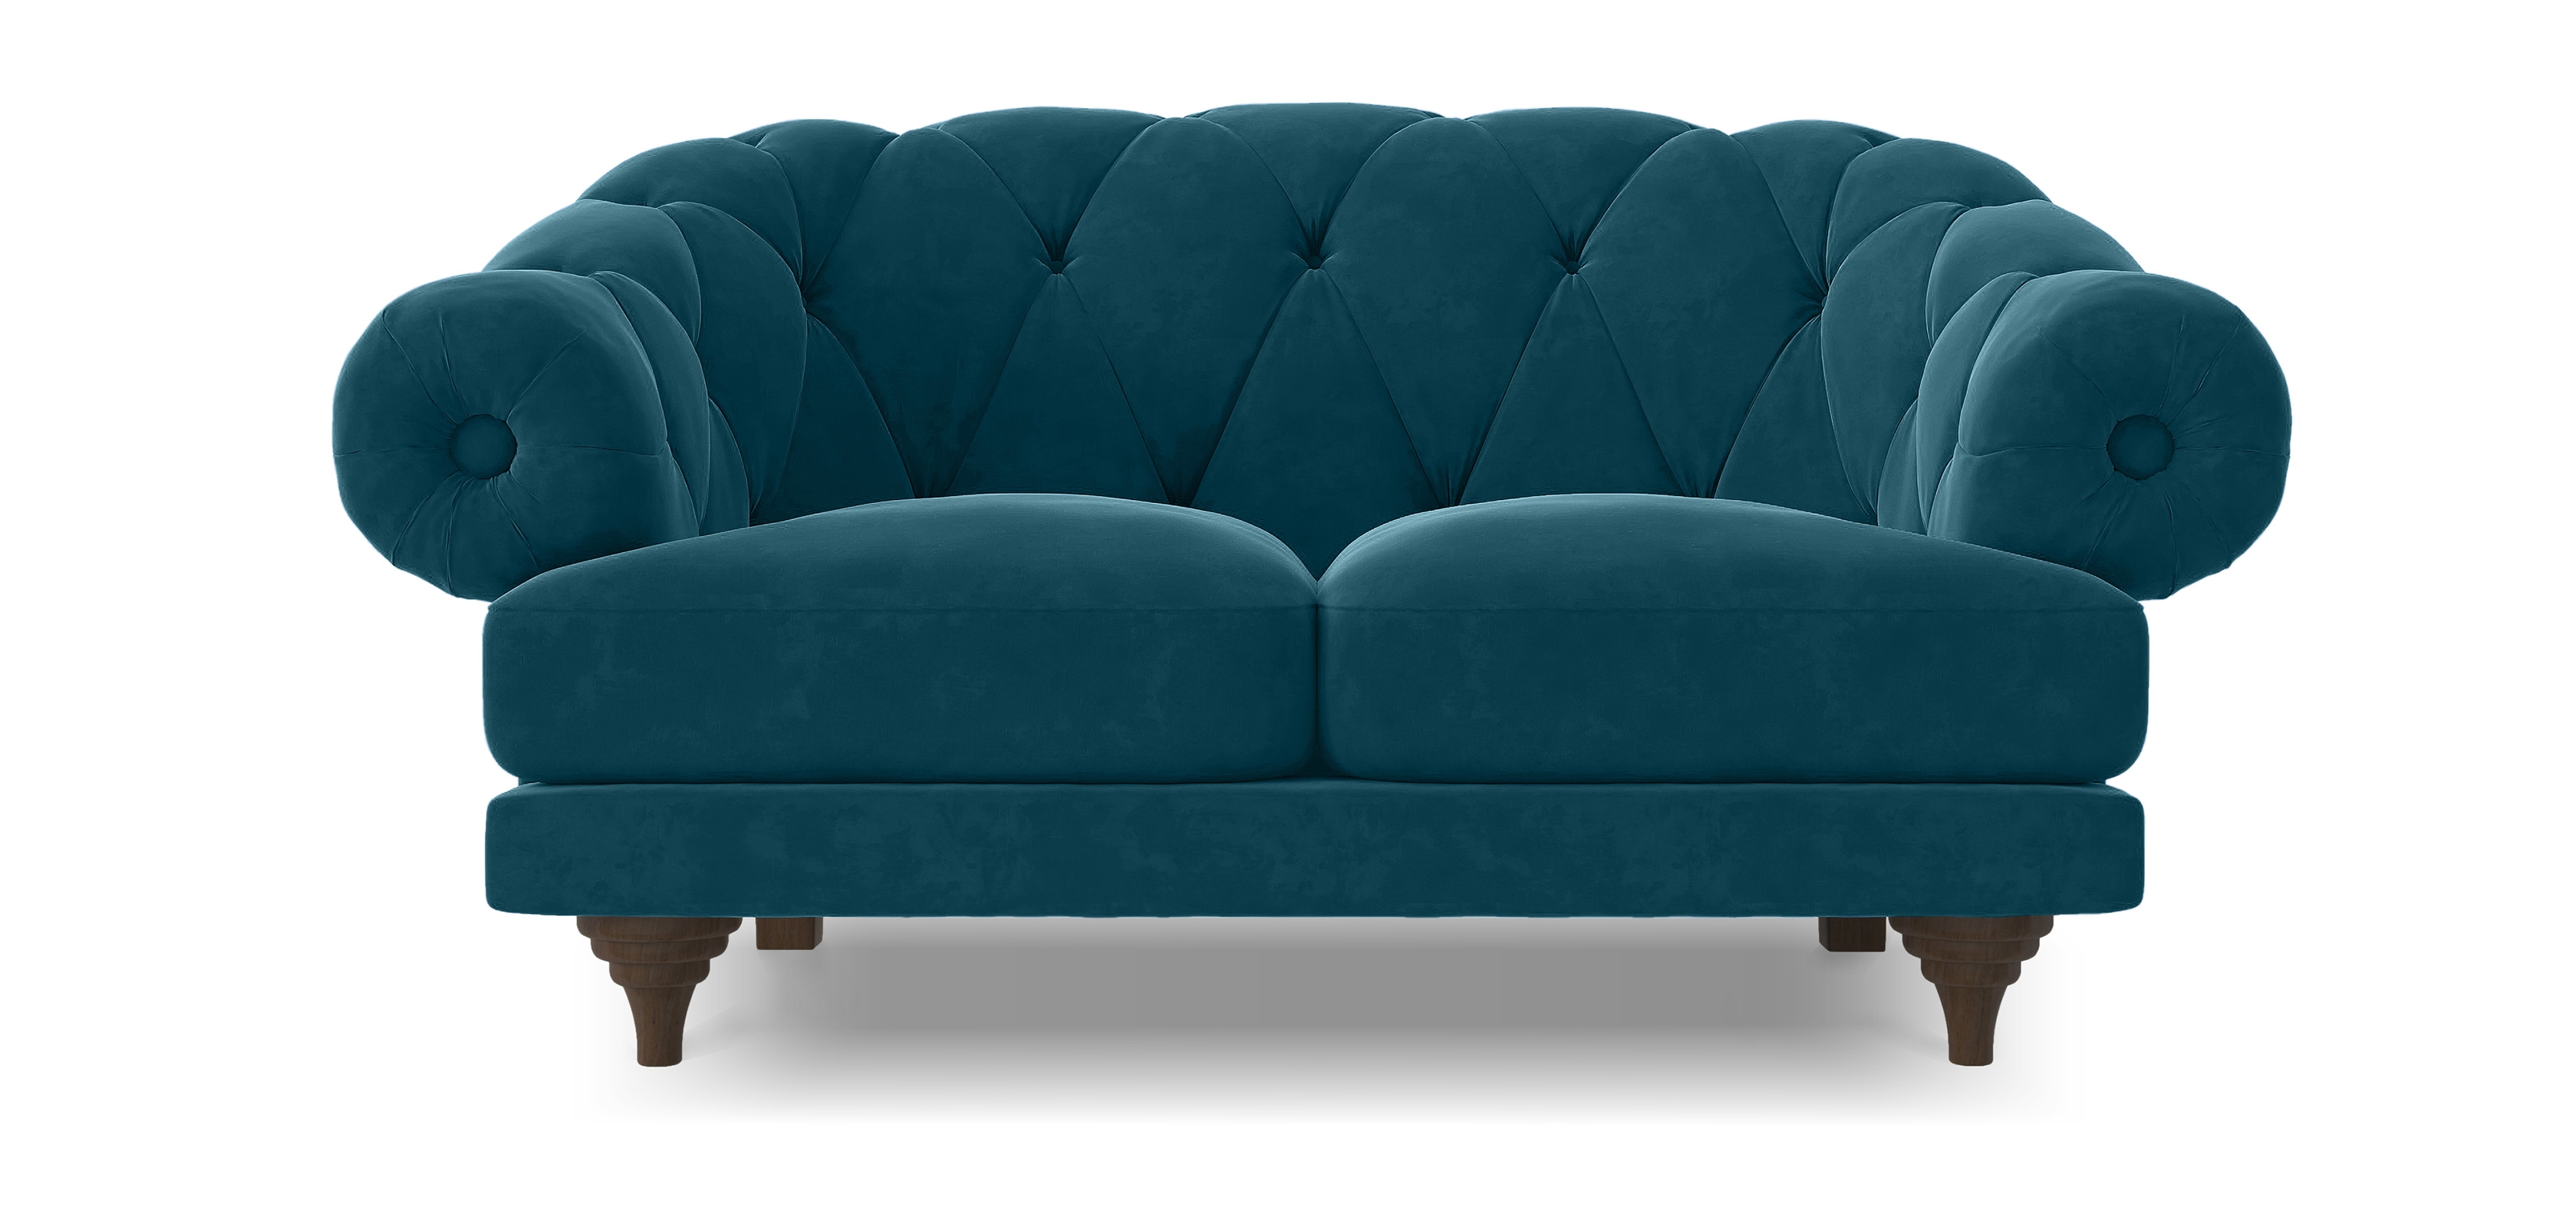 blue leather 2 seater sofa